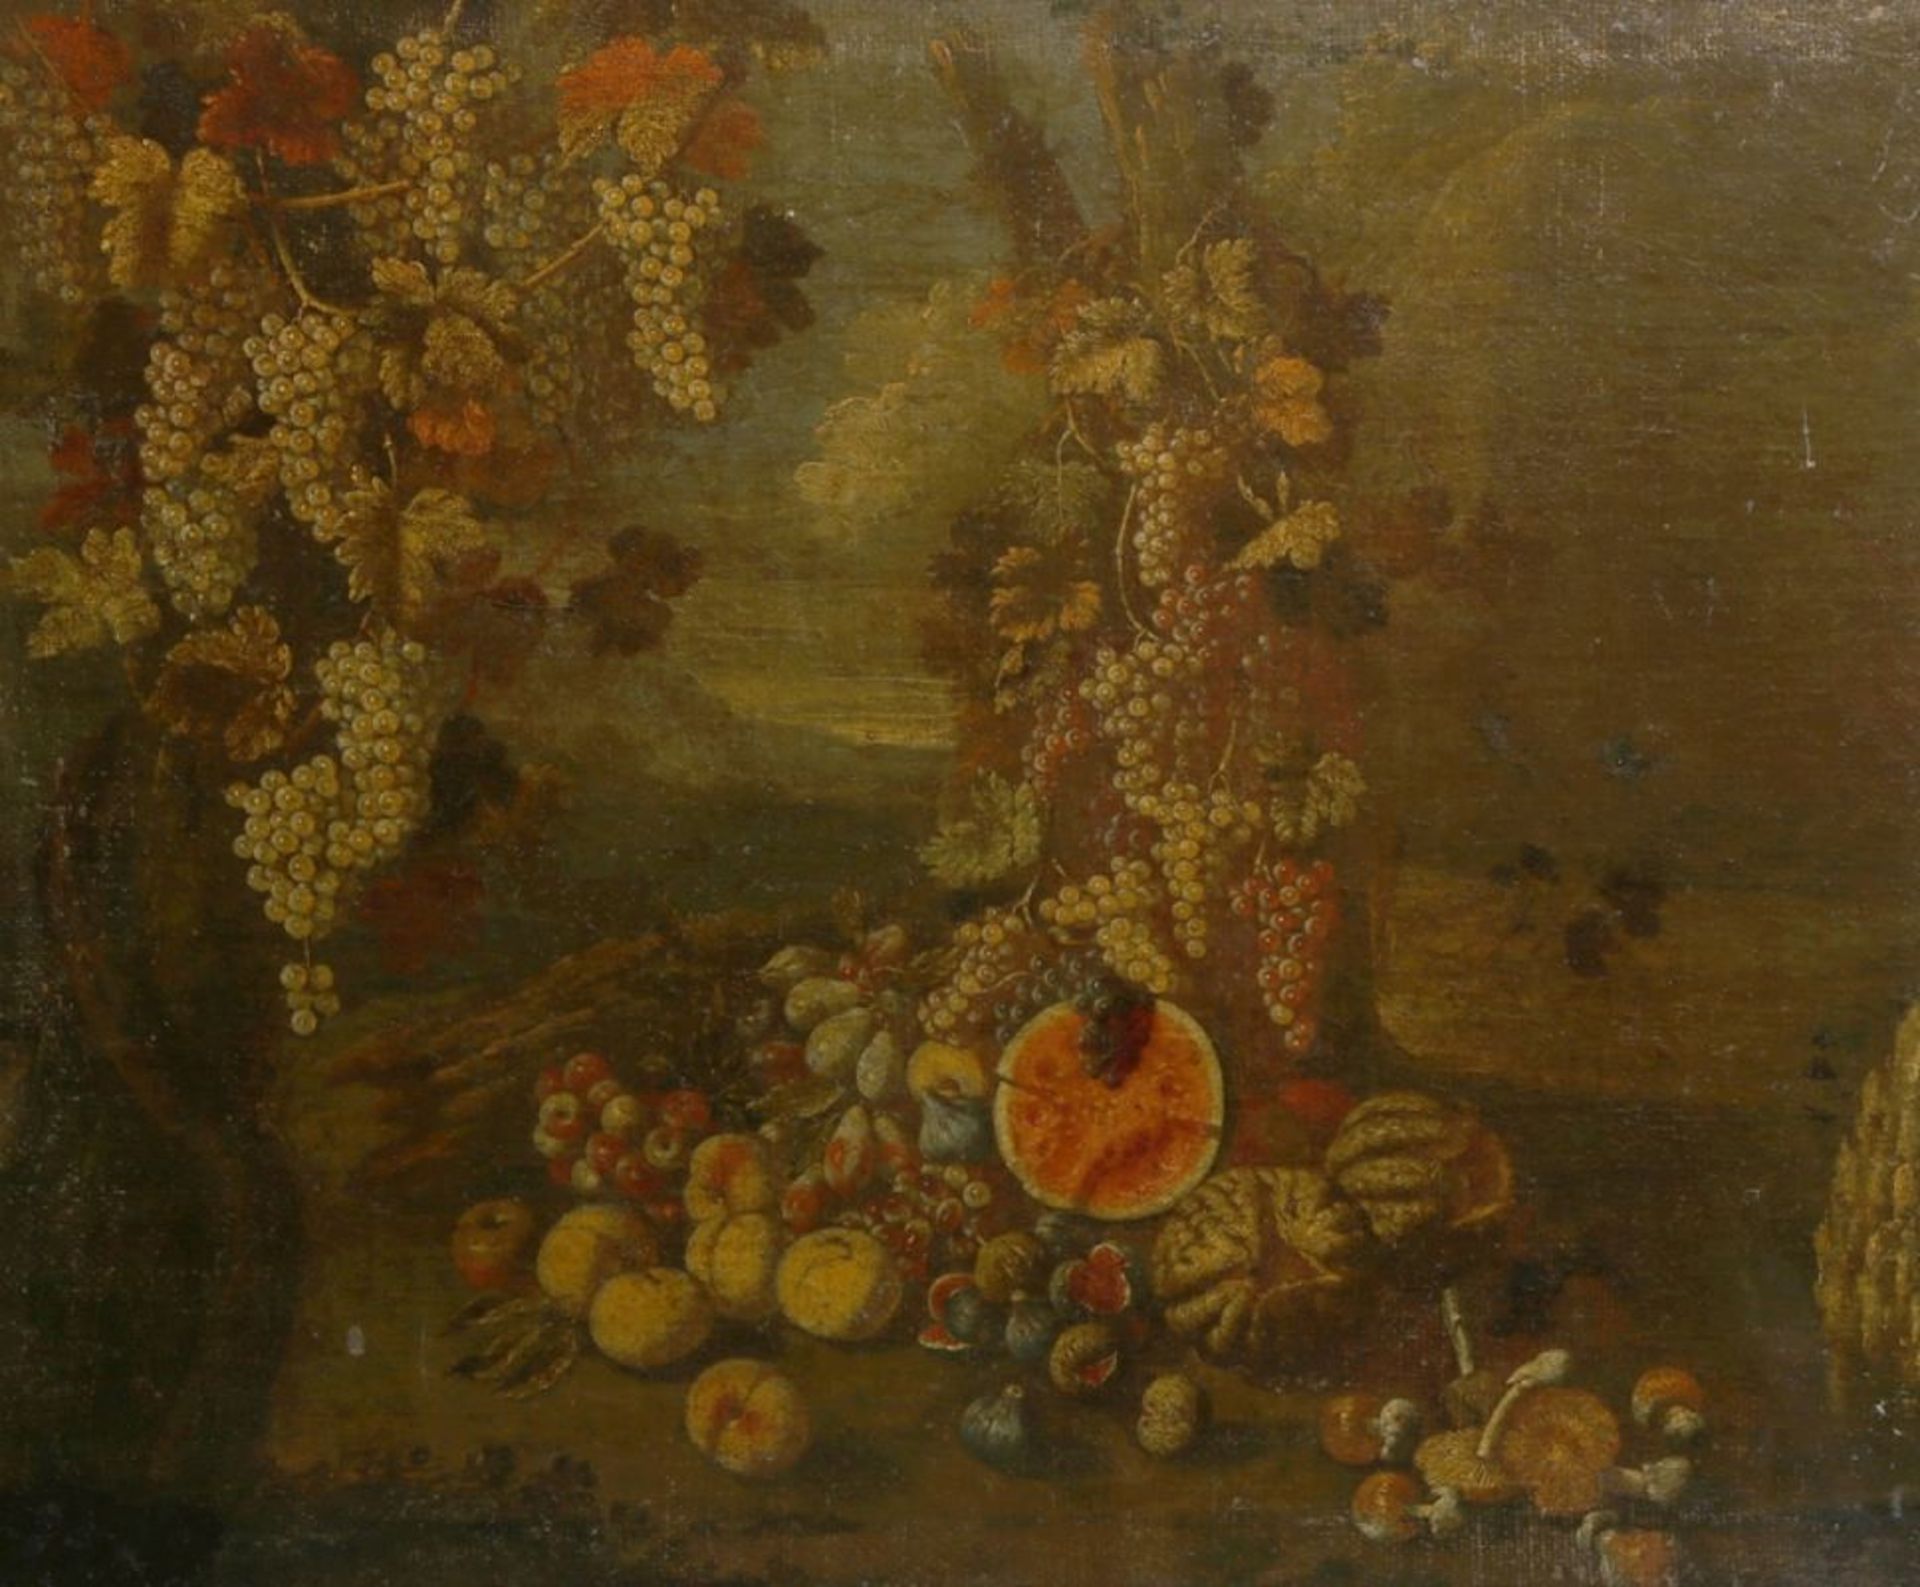 Anonymer Maler, 19. Jh. "Früchtestilleben", Öl/Lw., 50 x 60 cm